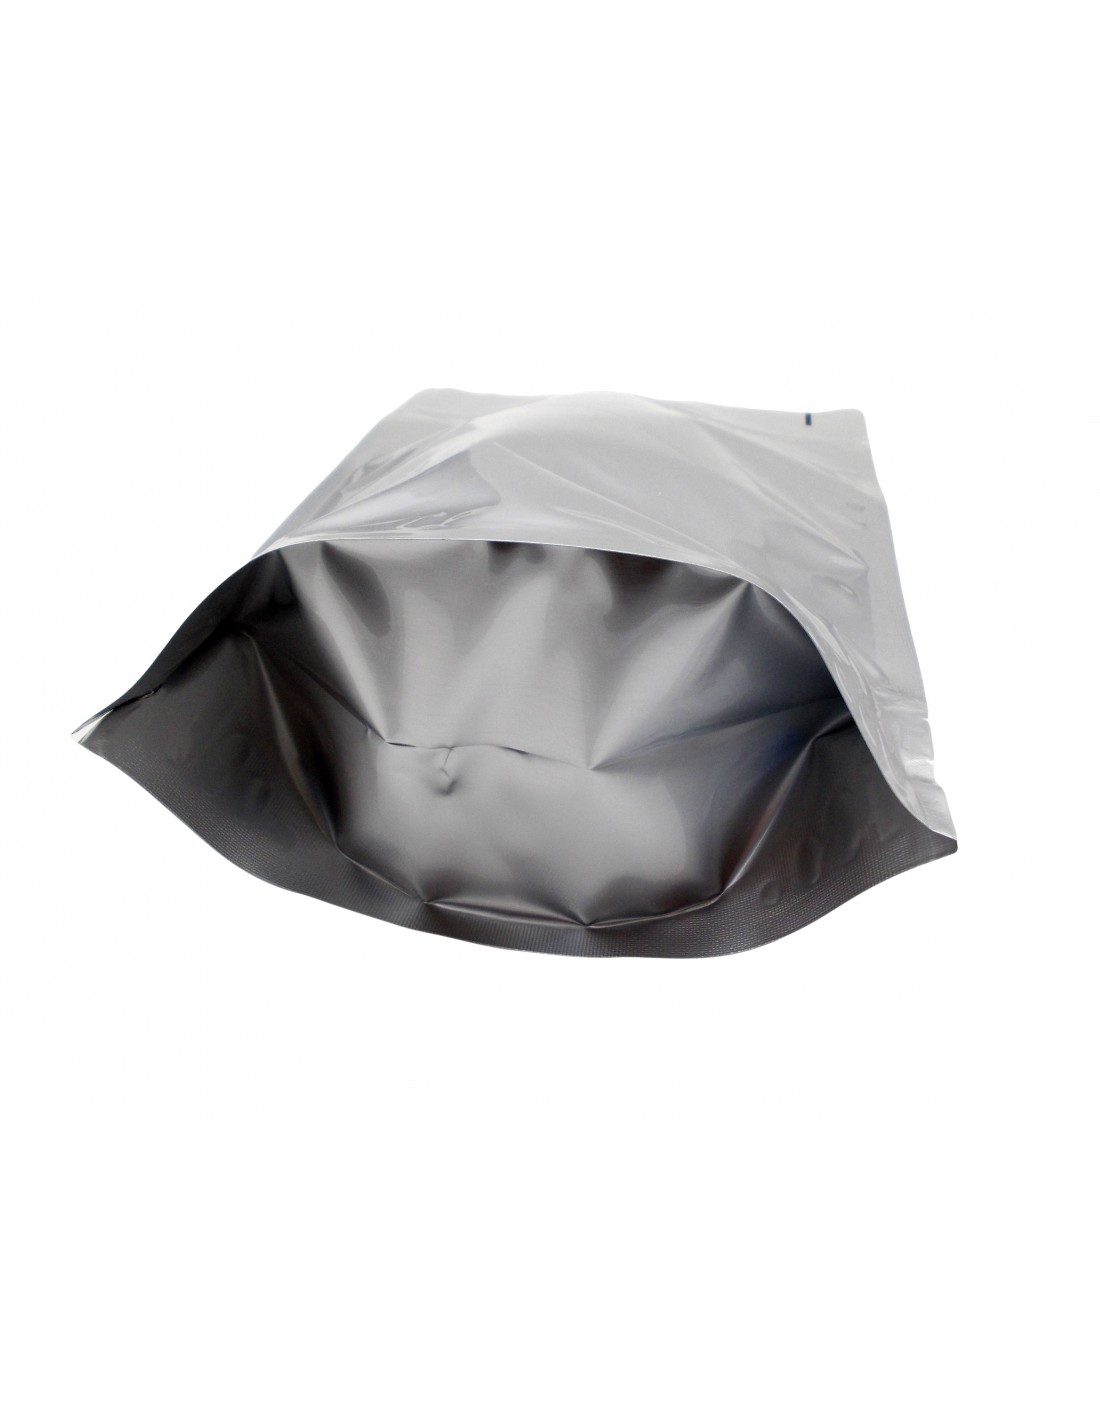 Open Top Heat Seal Foil Bags Different Colours Aluminium Foil UK Stock Free Post